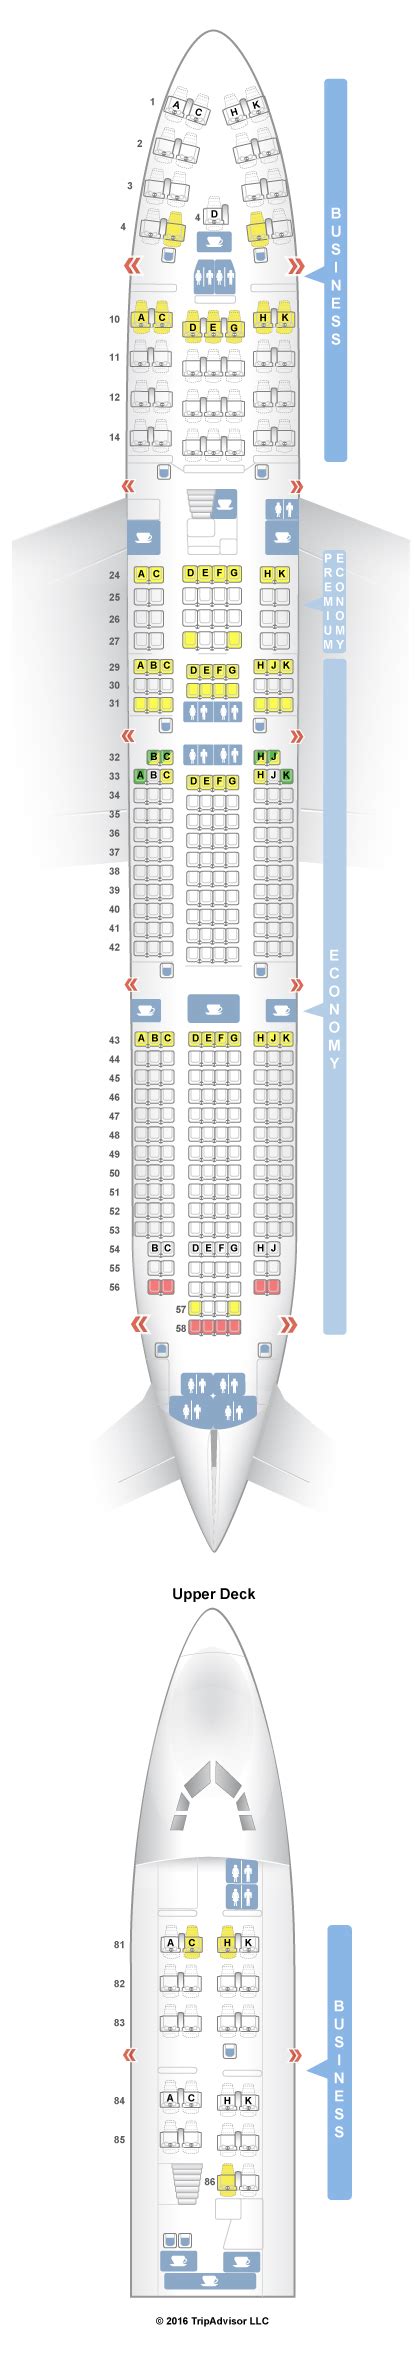 Lufthansa 747 Seat Map